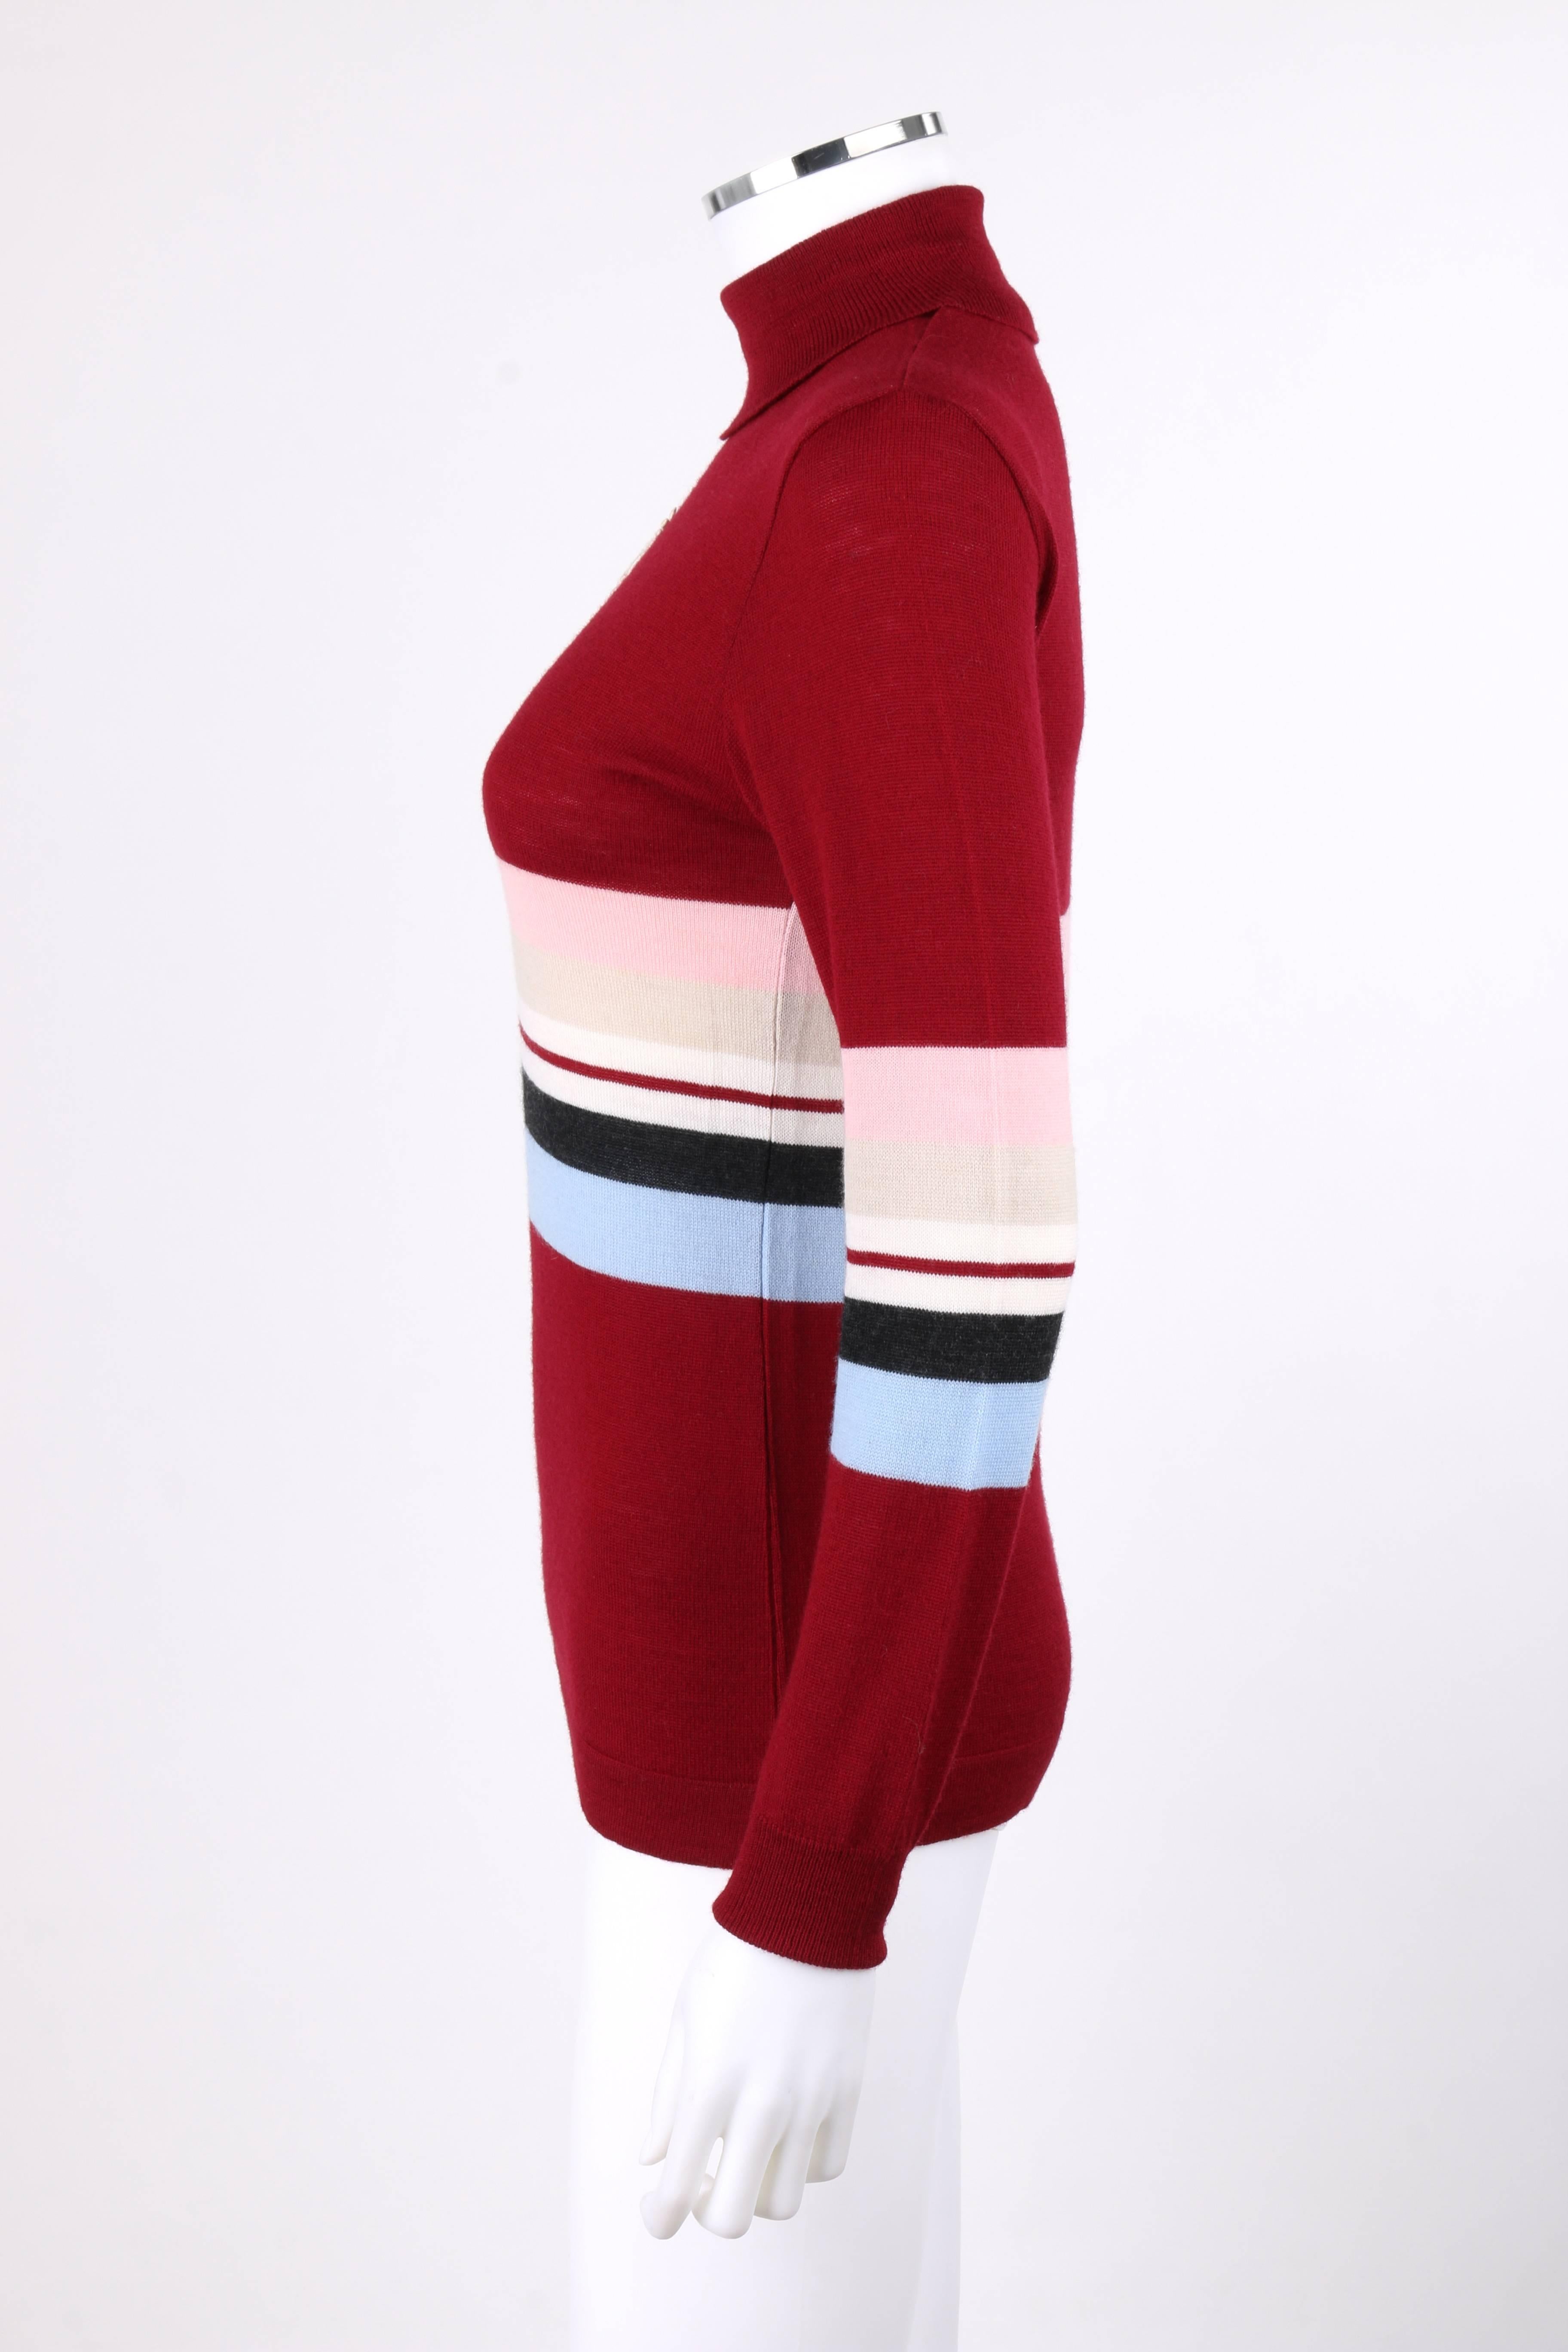 Red EMILIO PUCCI Burgundy Wool Striped Knit Turtleneck Sweater Top circa 1970s